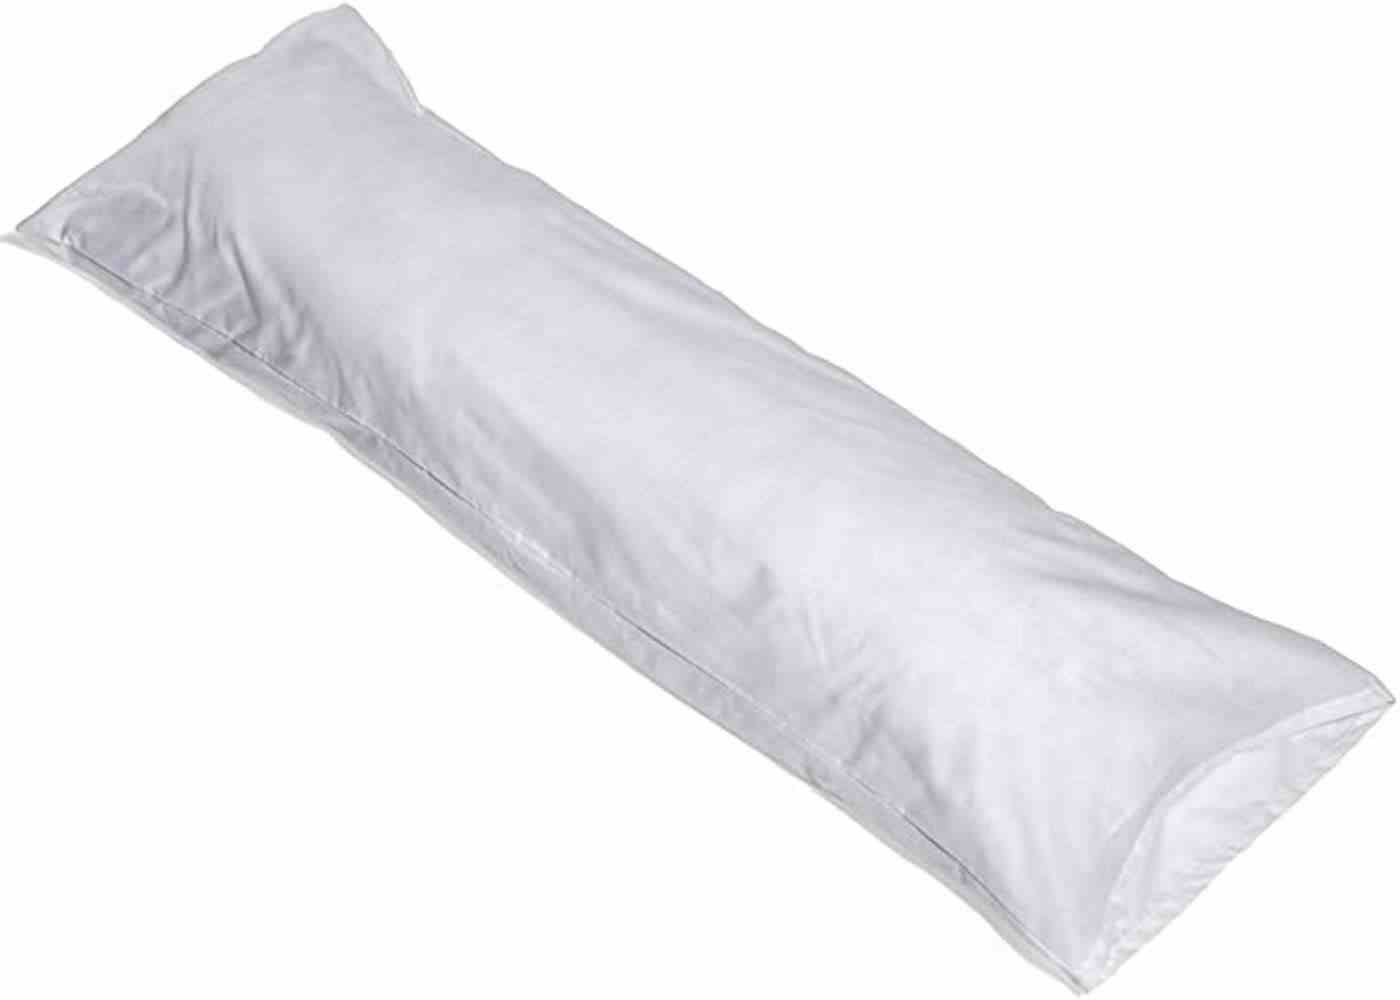 Hermell Body Support Pillow